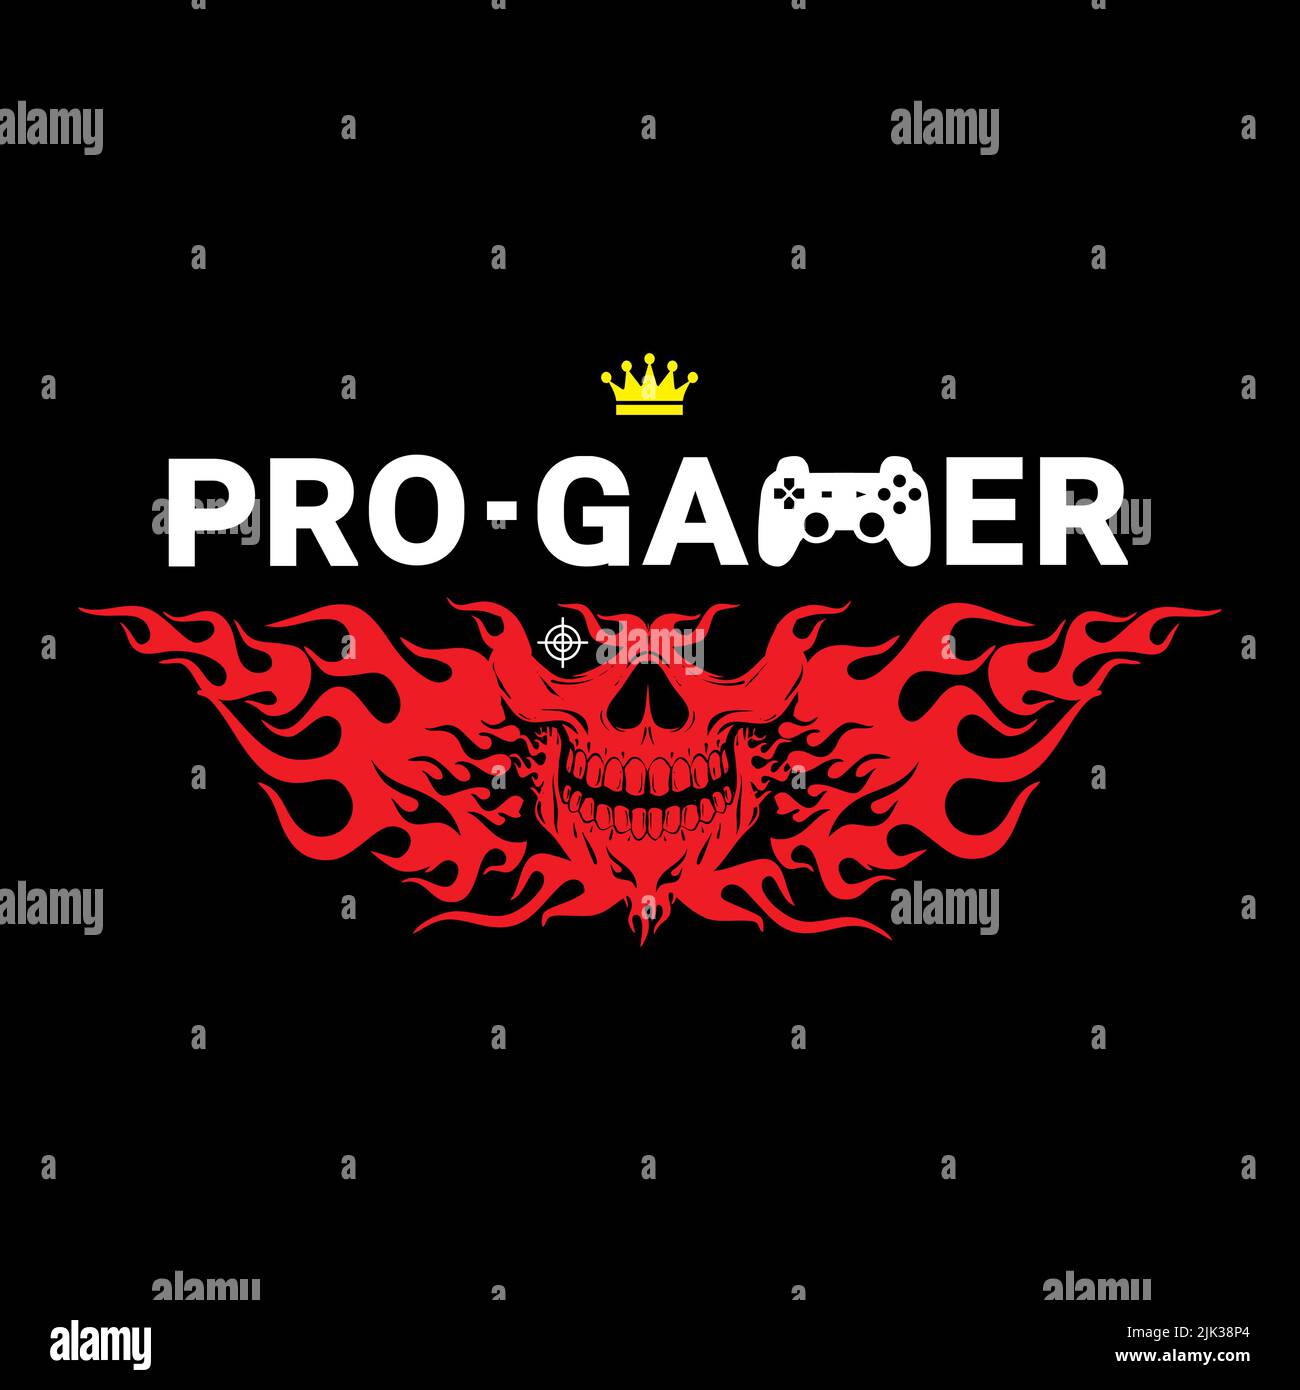 Pro Gamer - Flaming Skull Gaming Graphic Stock Photo